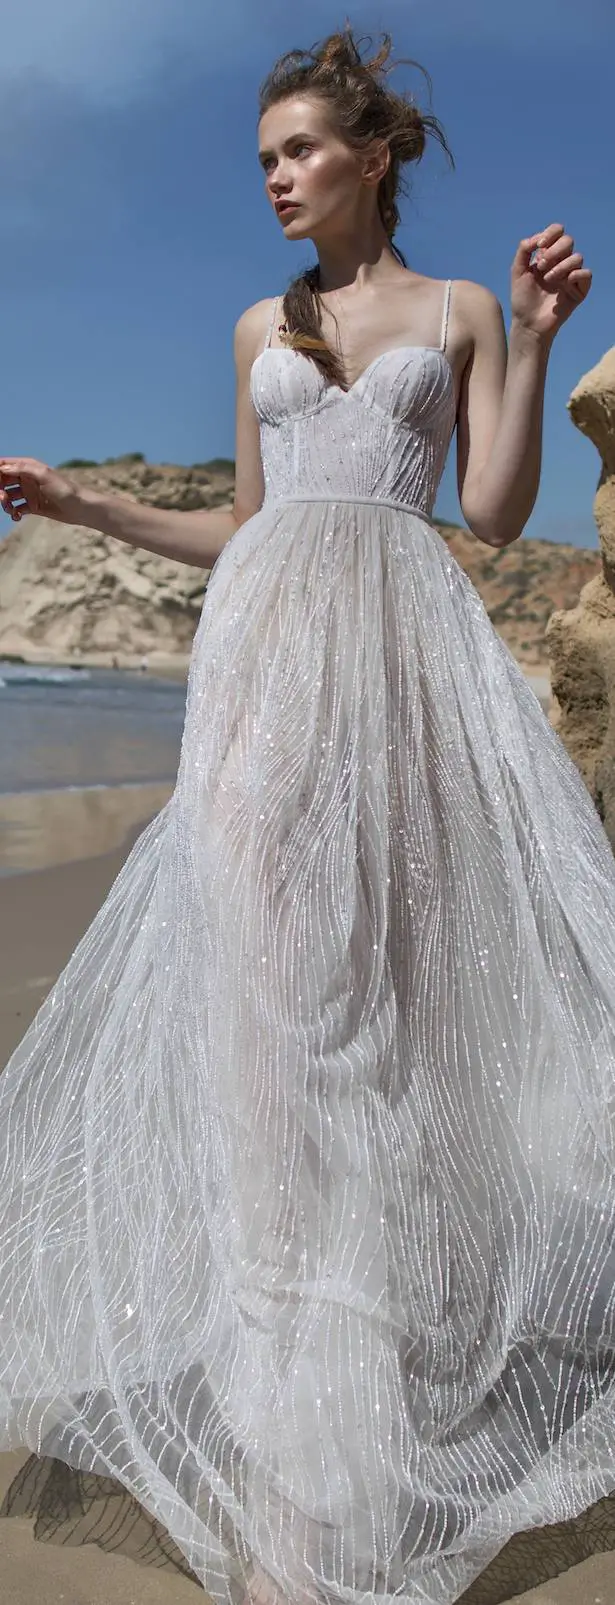 Wedding Dress by Limor Rosen Bridal Couture 2018 Free Spirit Collection - Kate